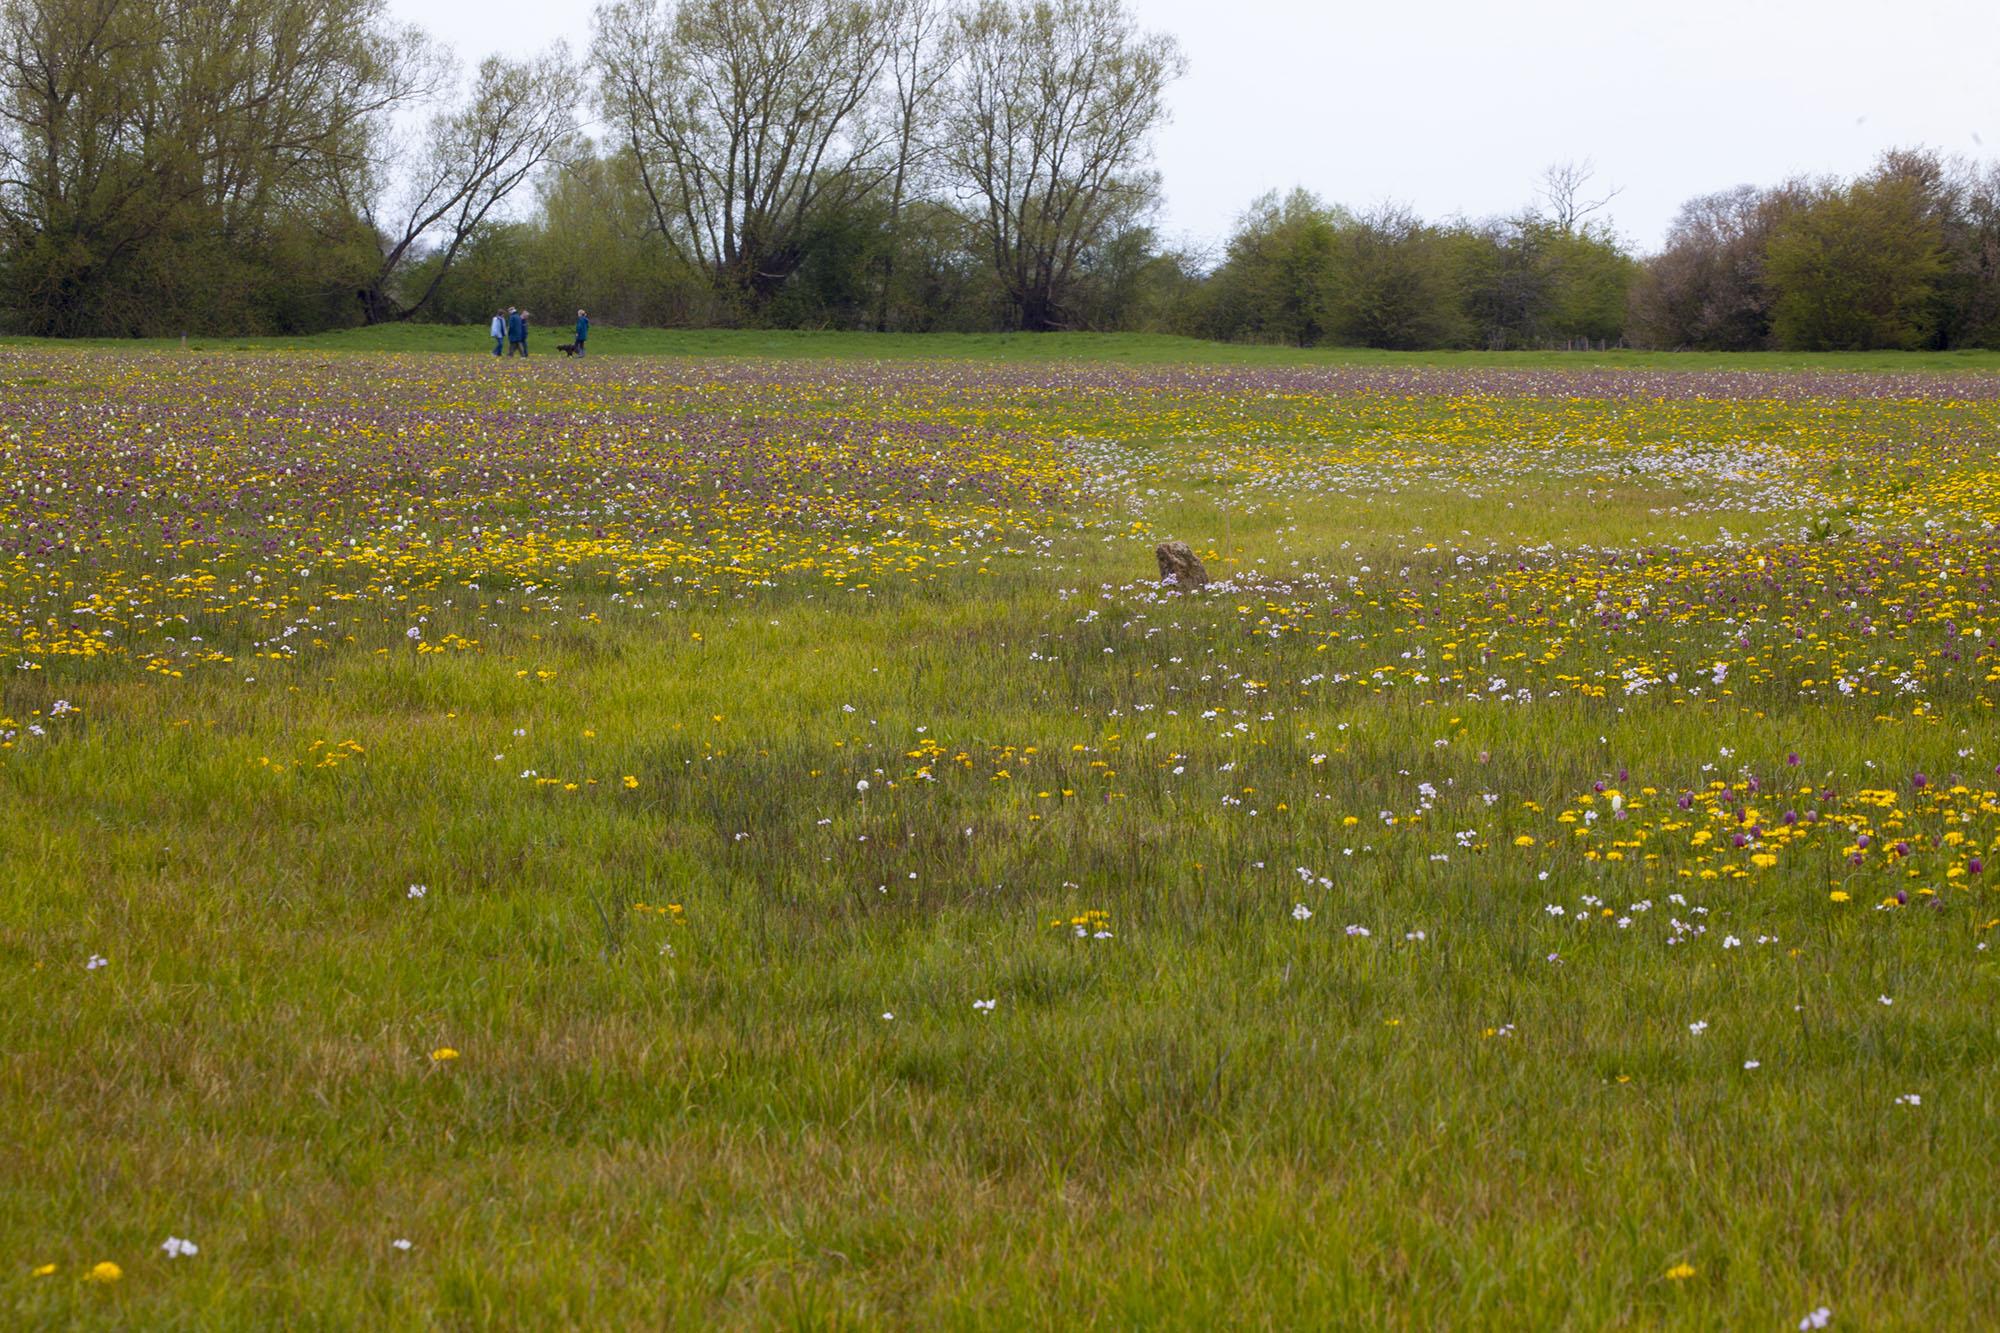 Field full of wildflowers